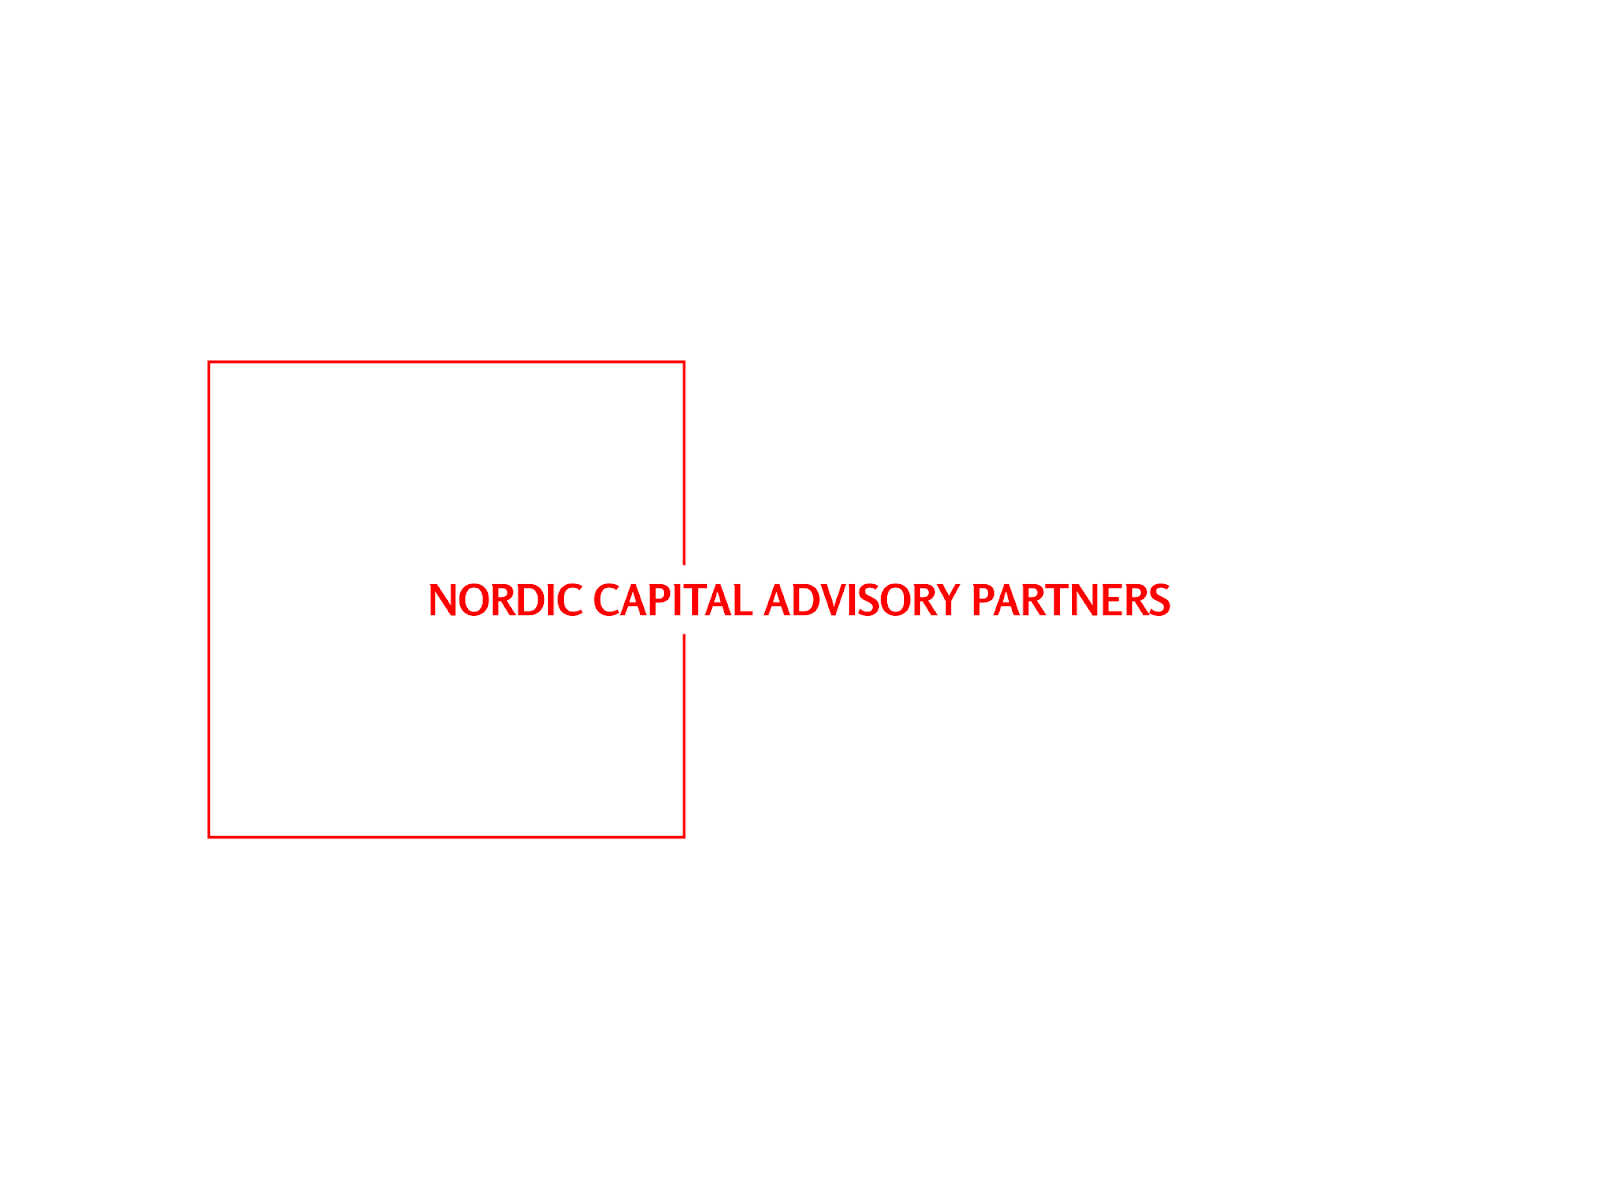 Nordic Capital Advisory Partners LOGO